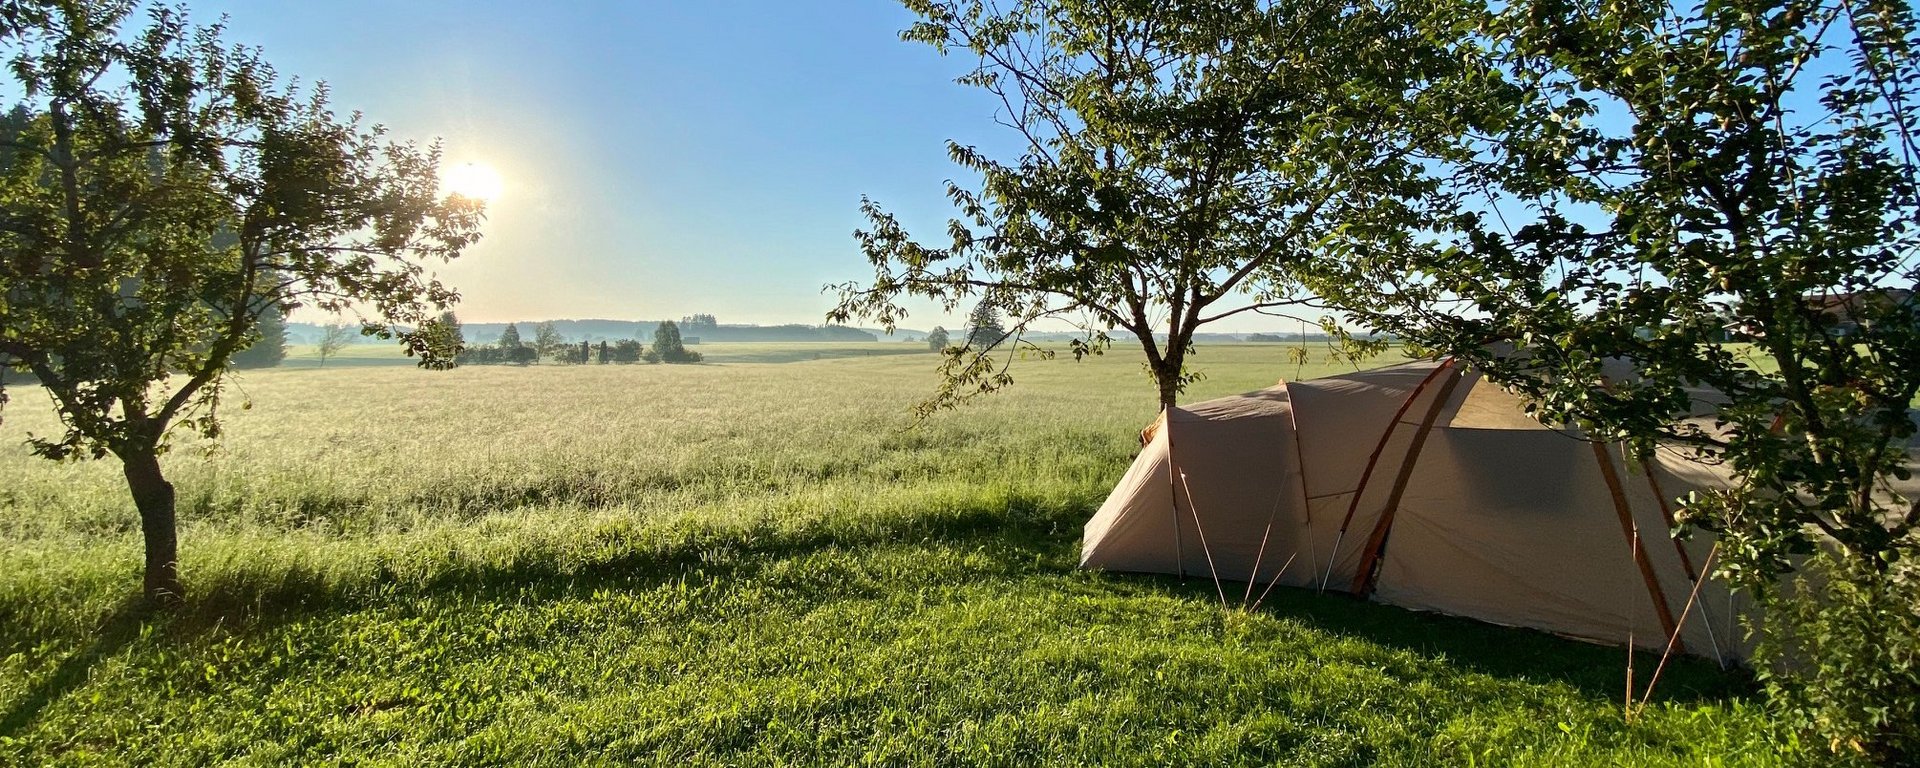 Campingurlaub auf dem Bauernhof im Allgäu